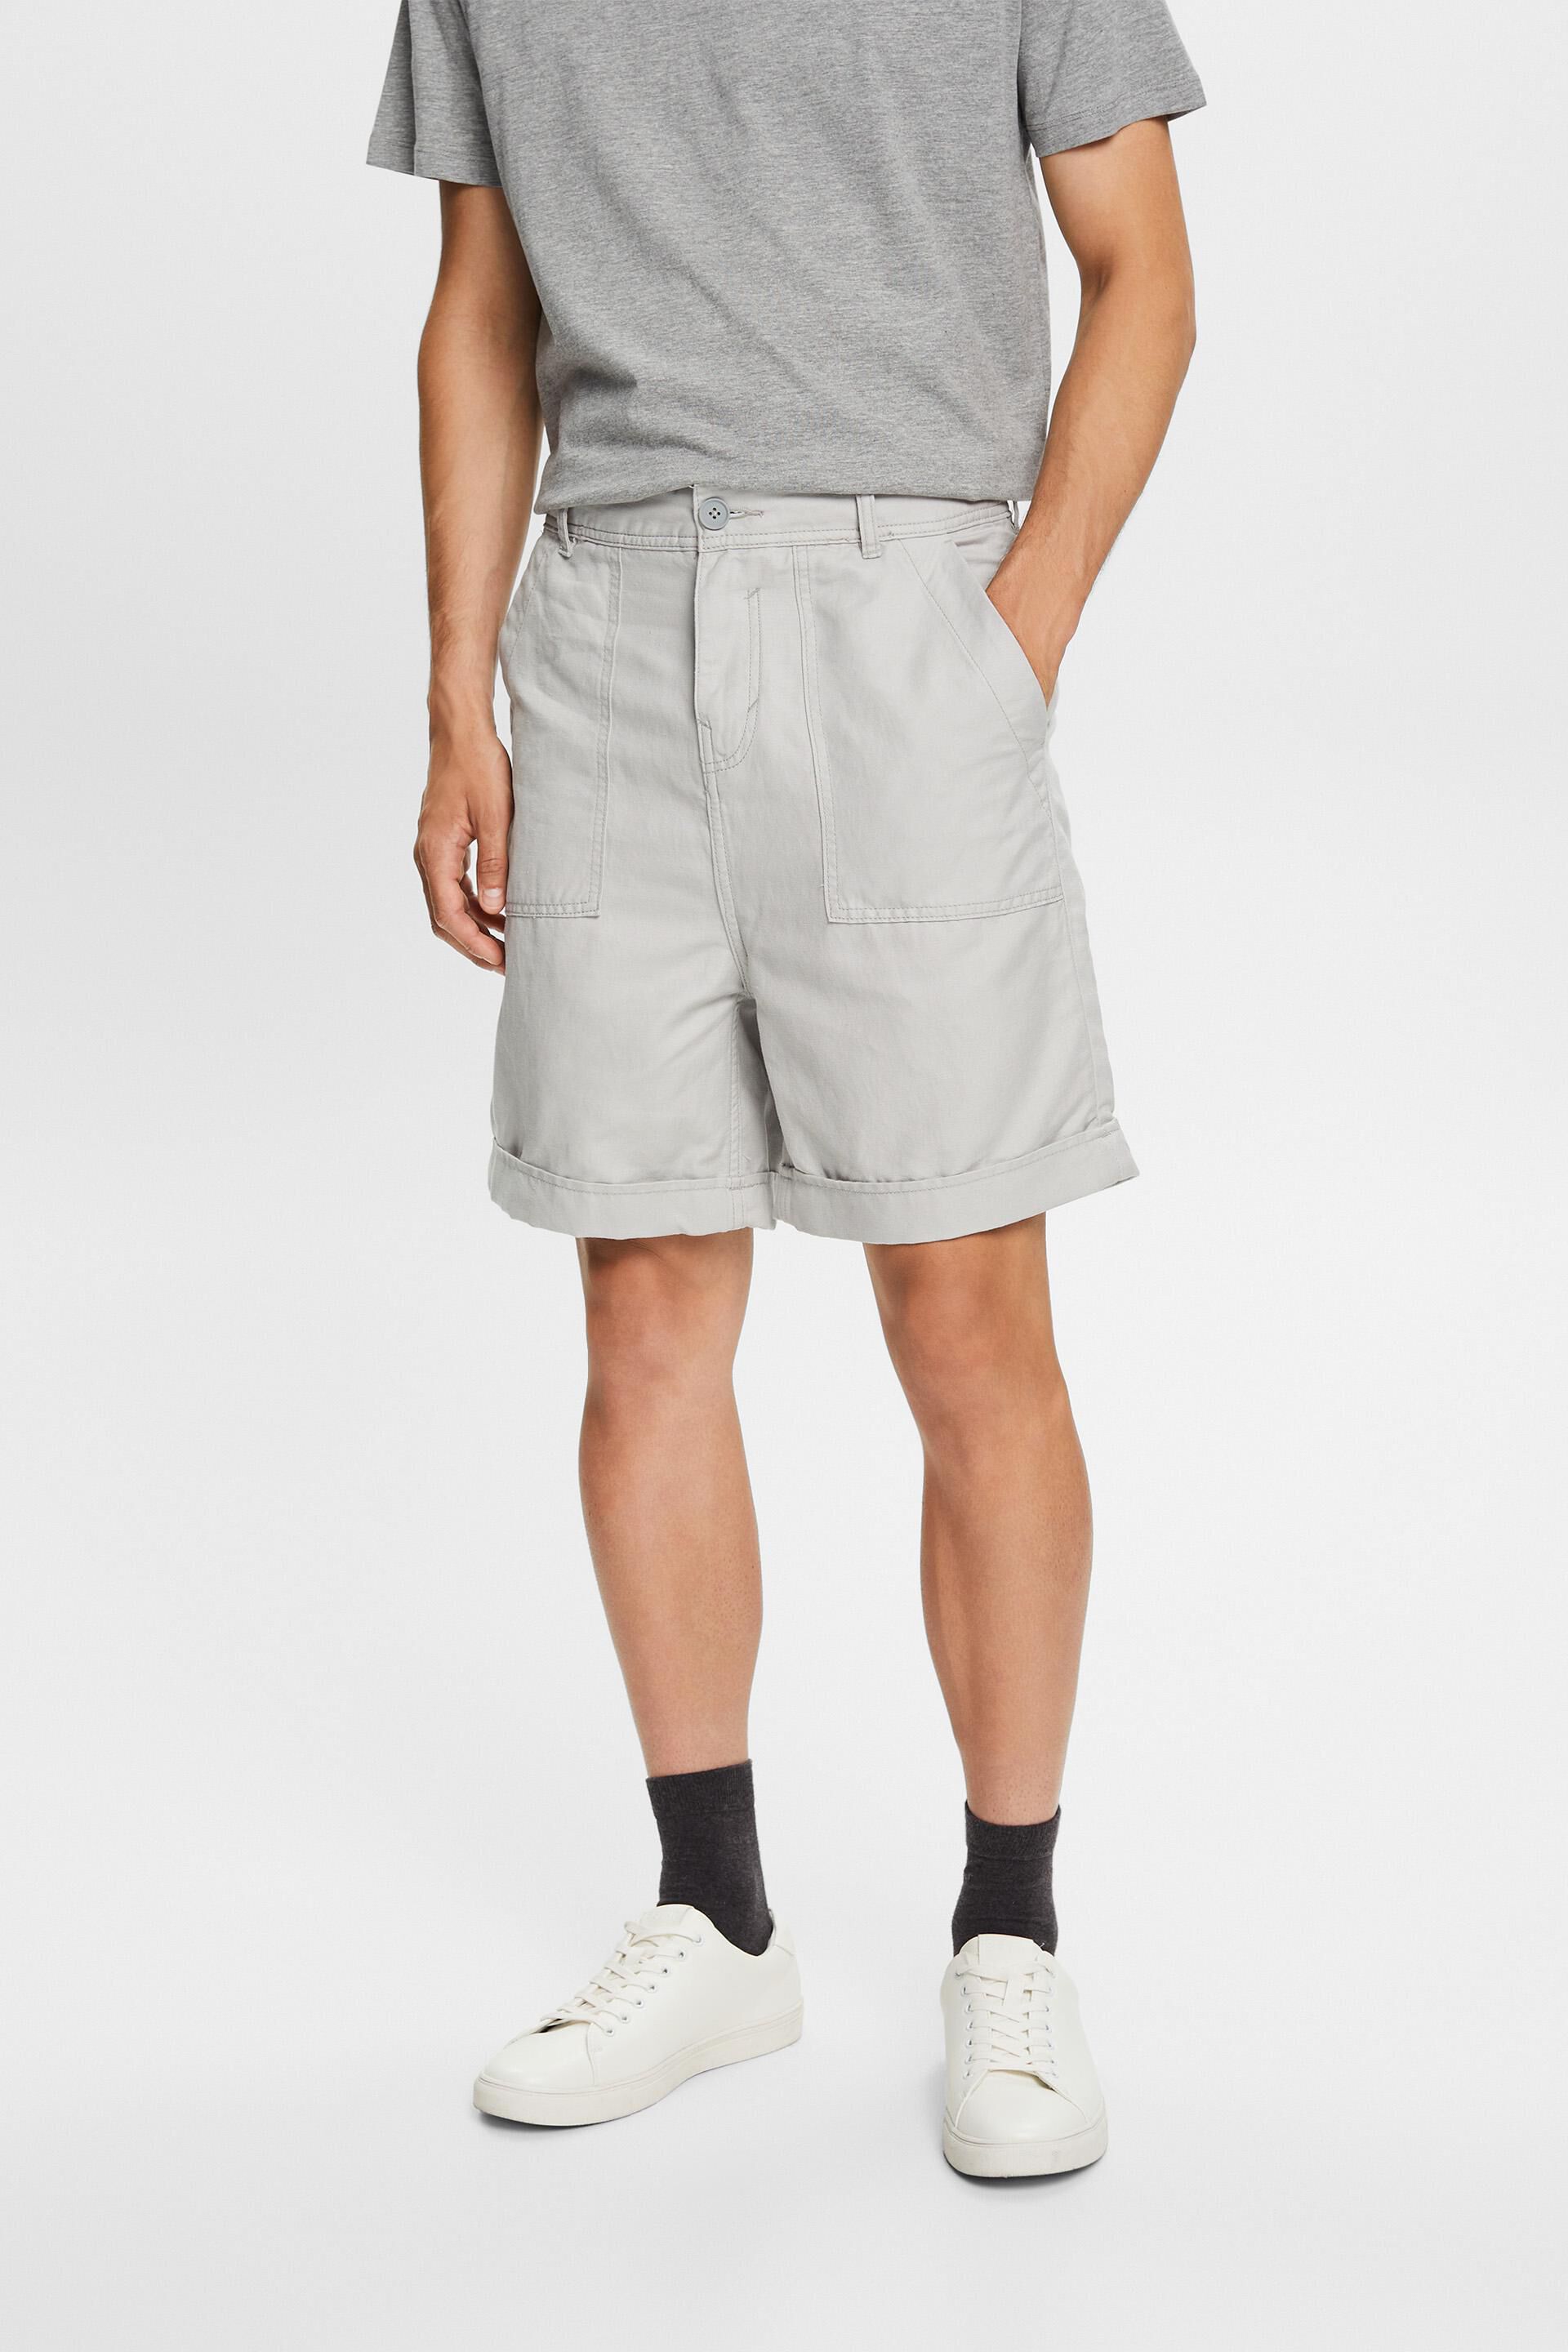 Bermuda shorts, cotton-linen blend